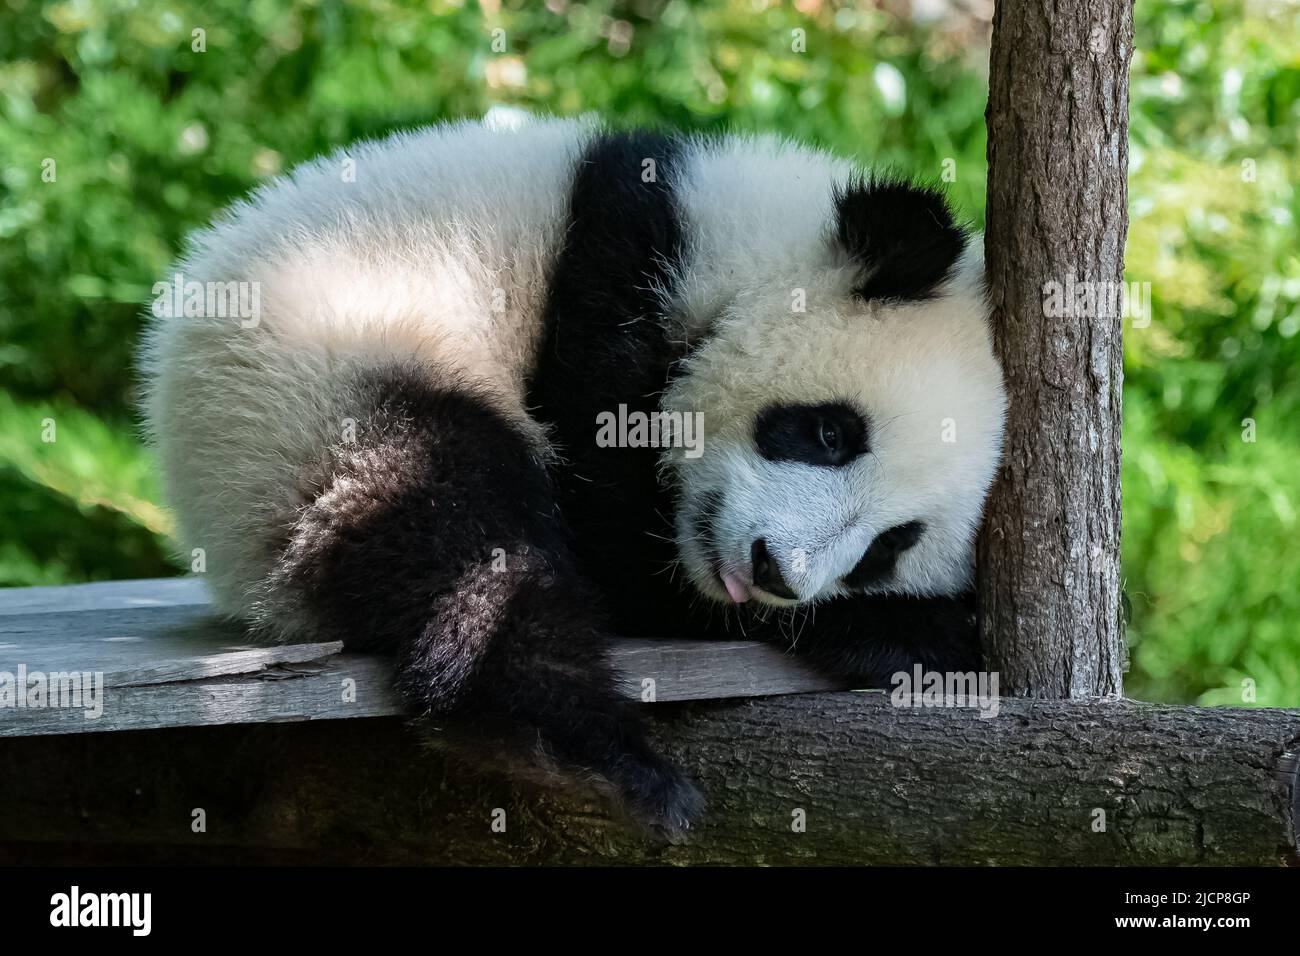 A giant panda, a cute baby panda napping, funny animal Stock Photo - Alamy